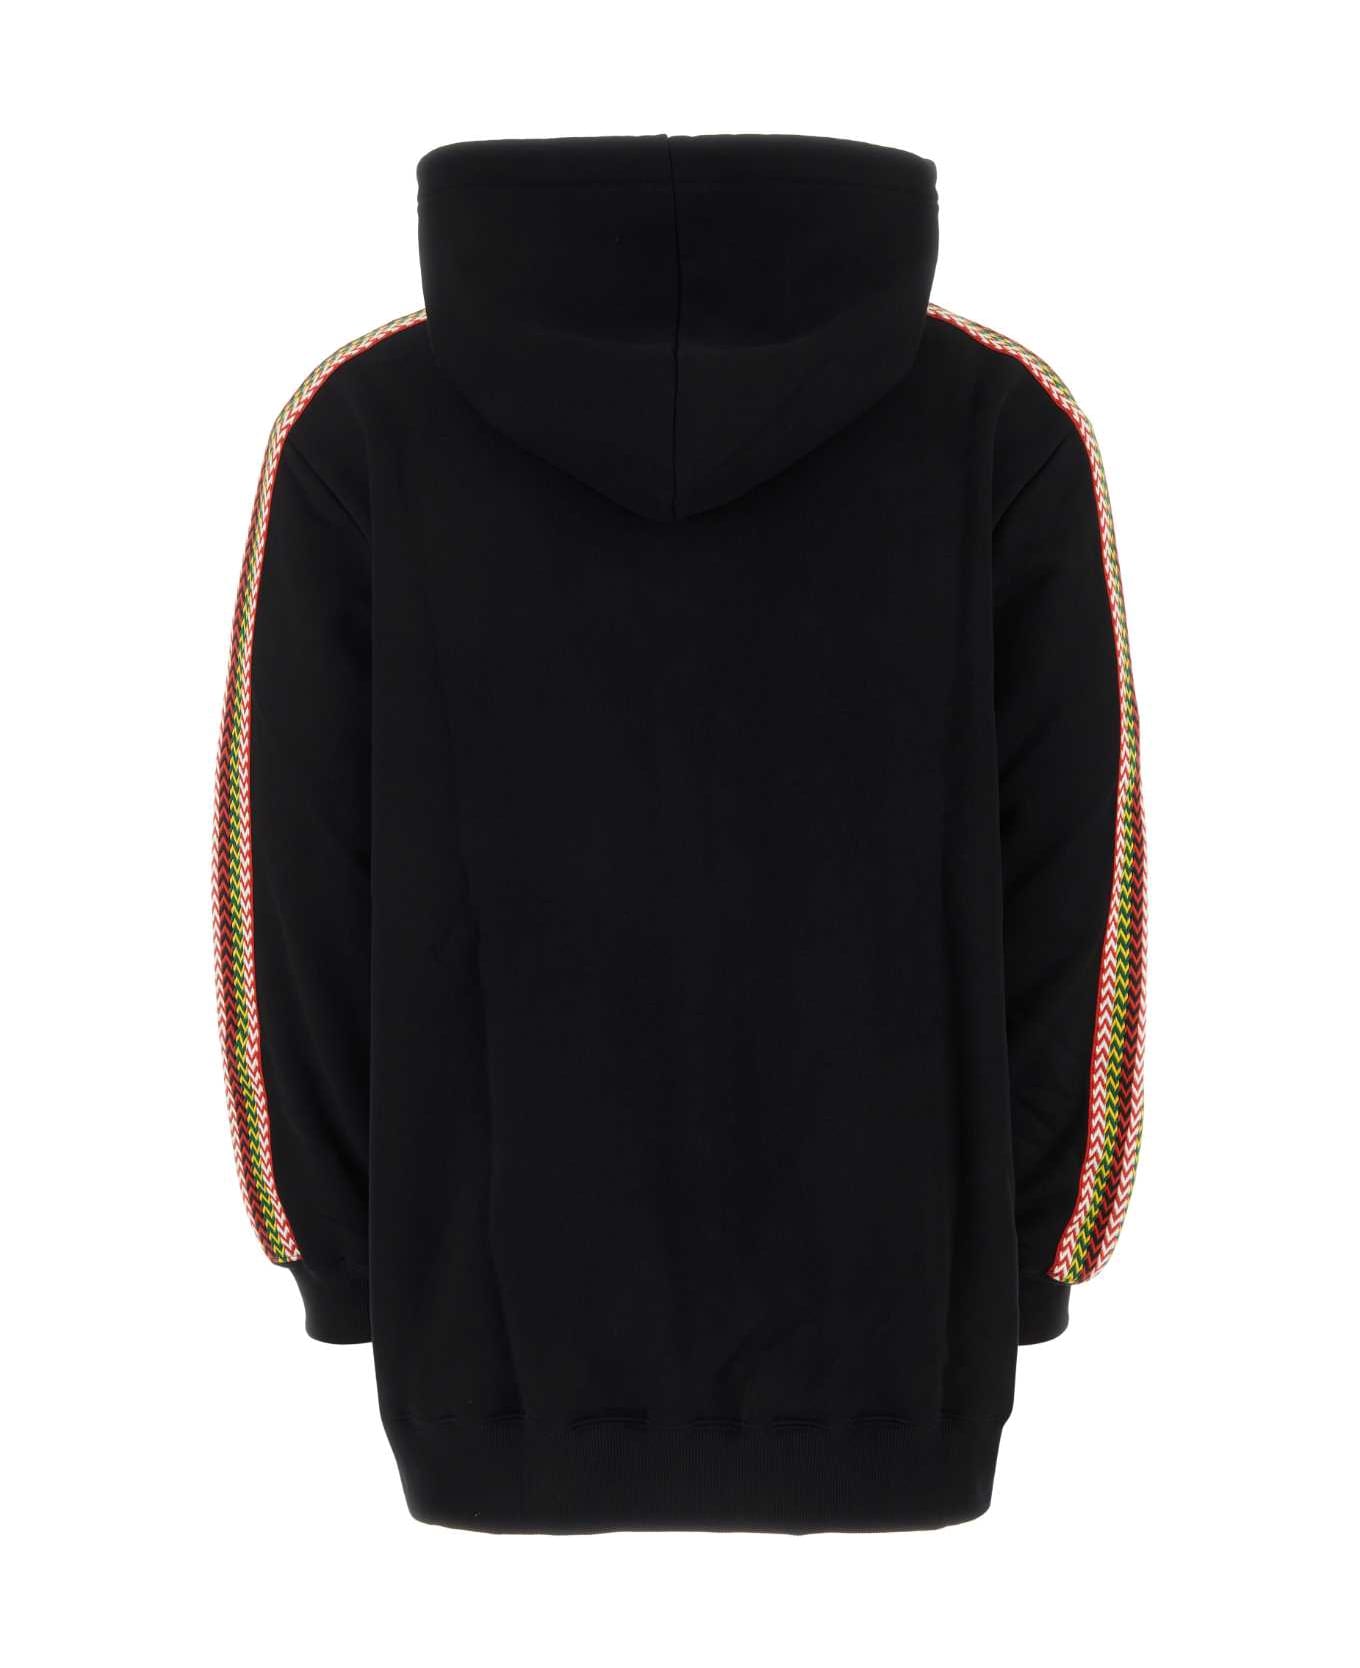 Lanvin Black Cotton Oversize Sweatshirt - Black フリース